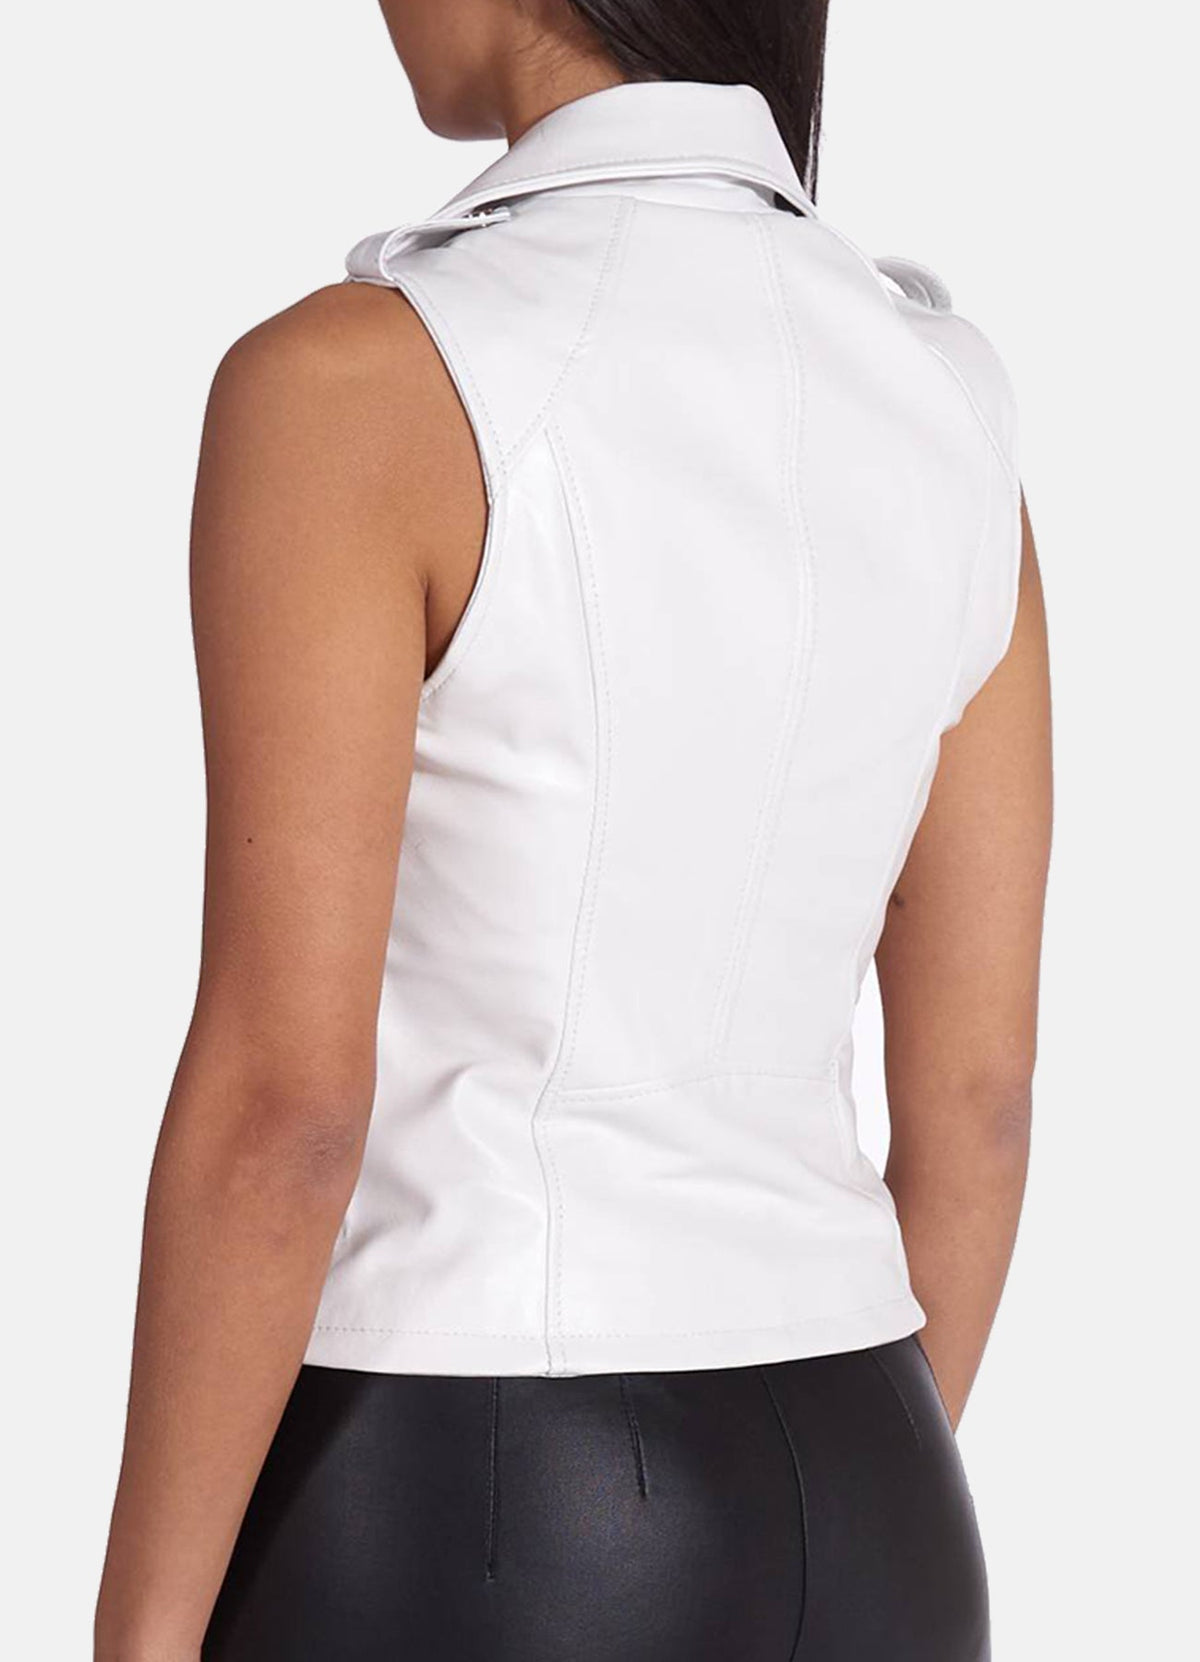 Womens Bright White Biker Leather Vest